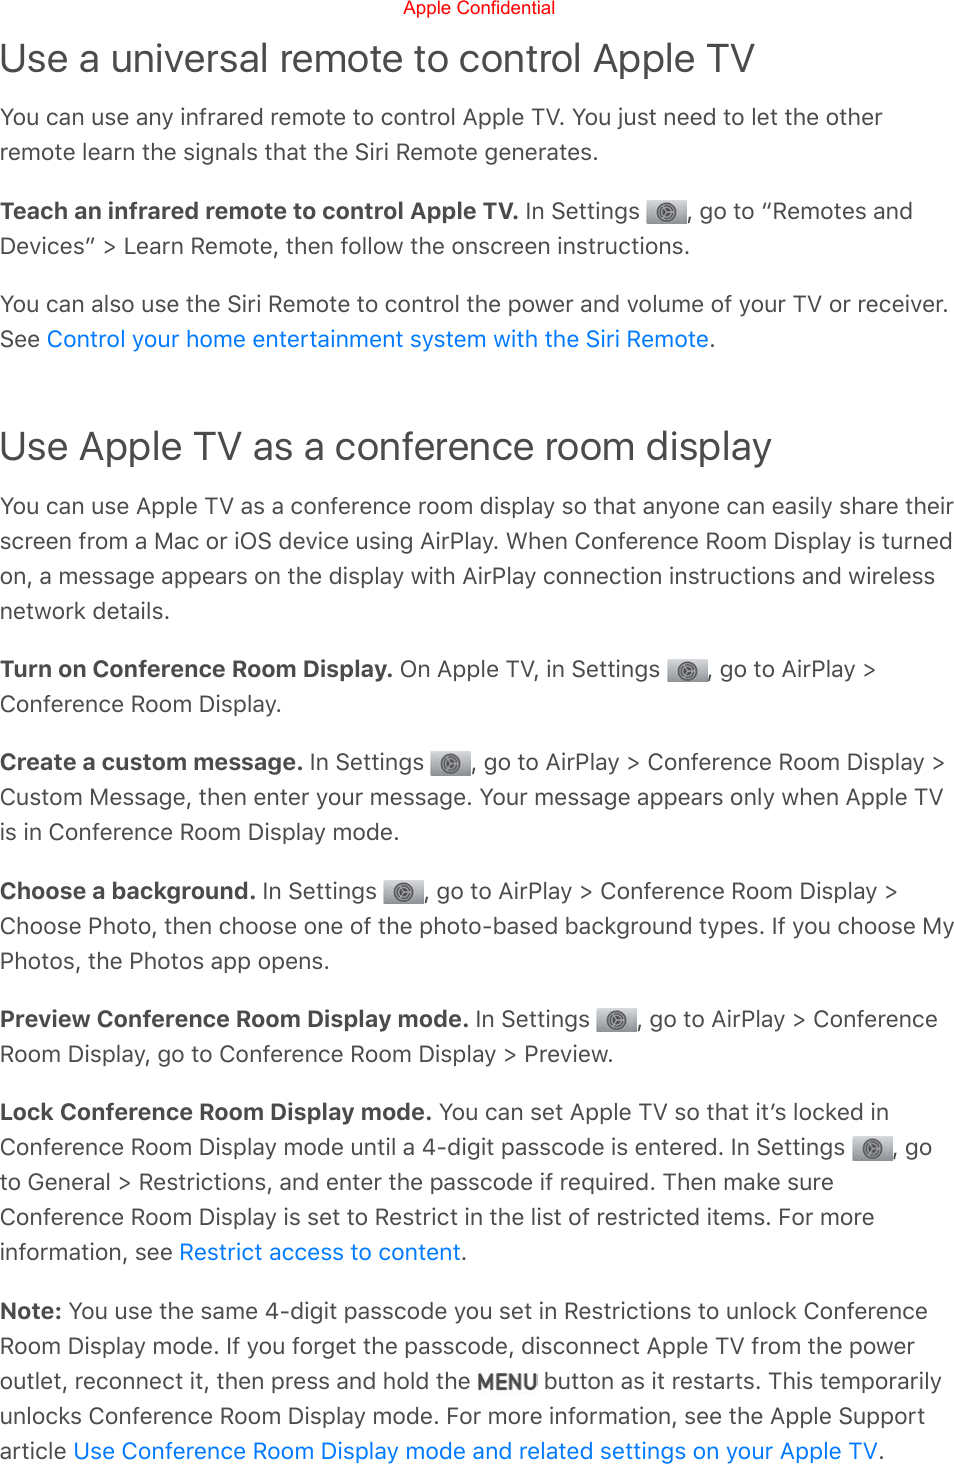 User Manual For Apple Tv 4k Remote